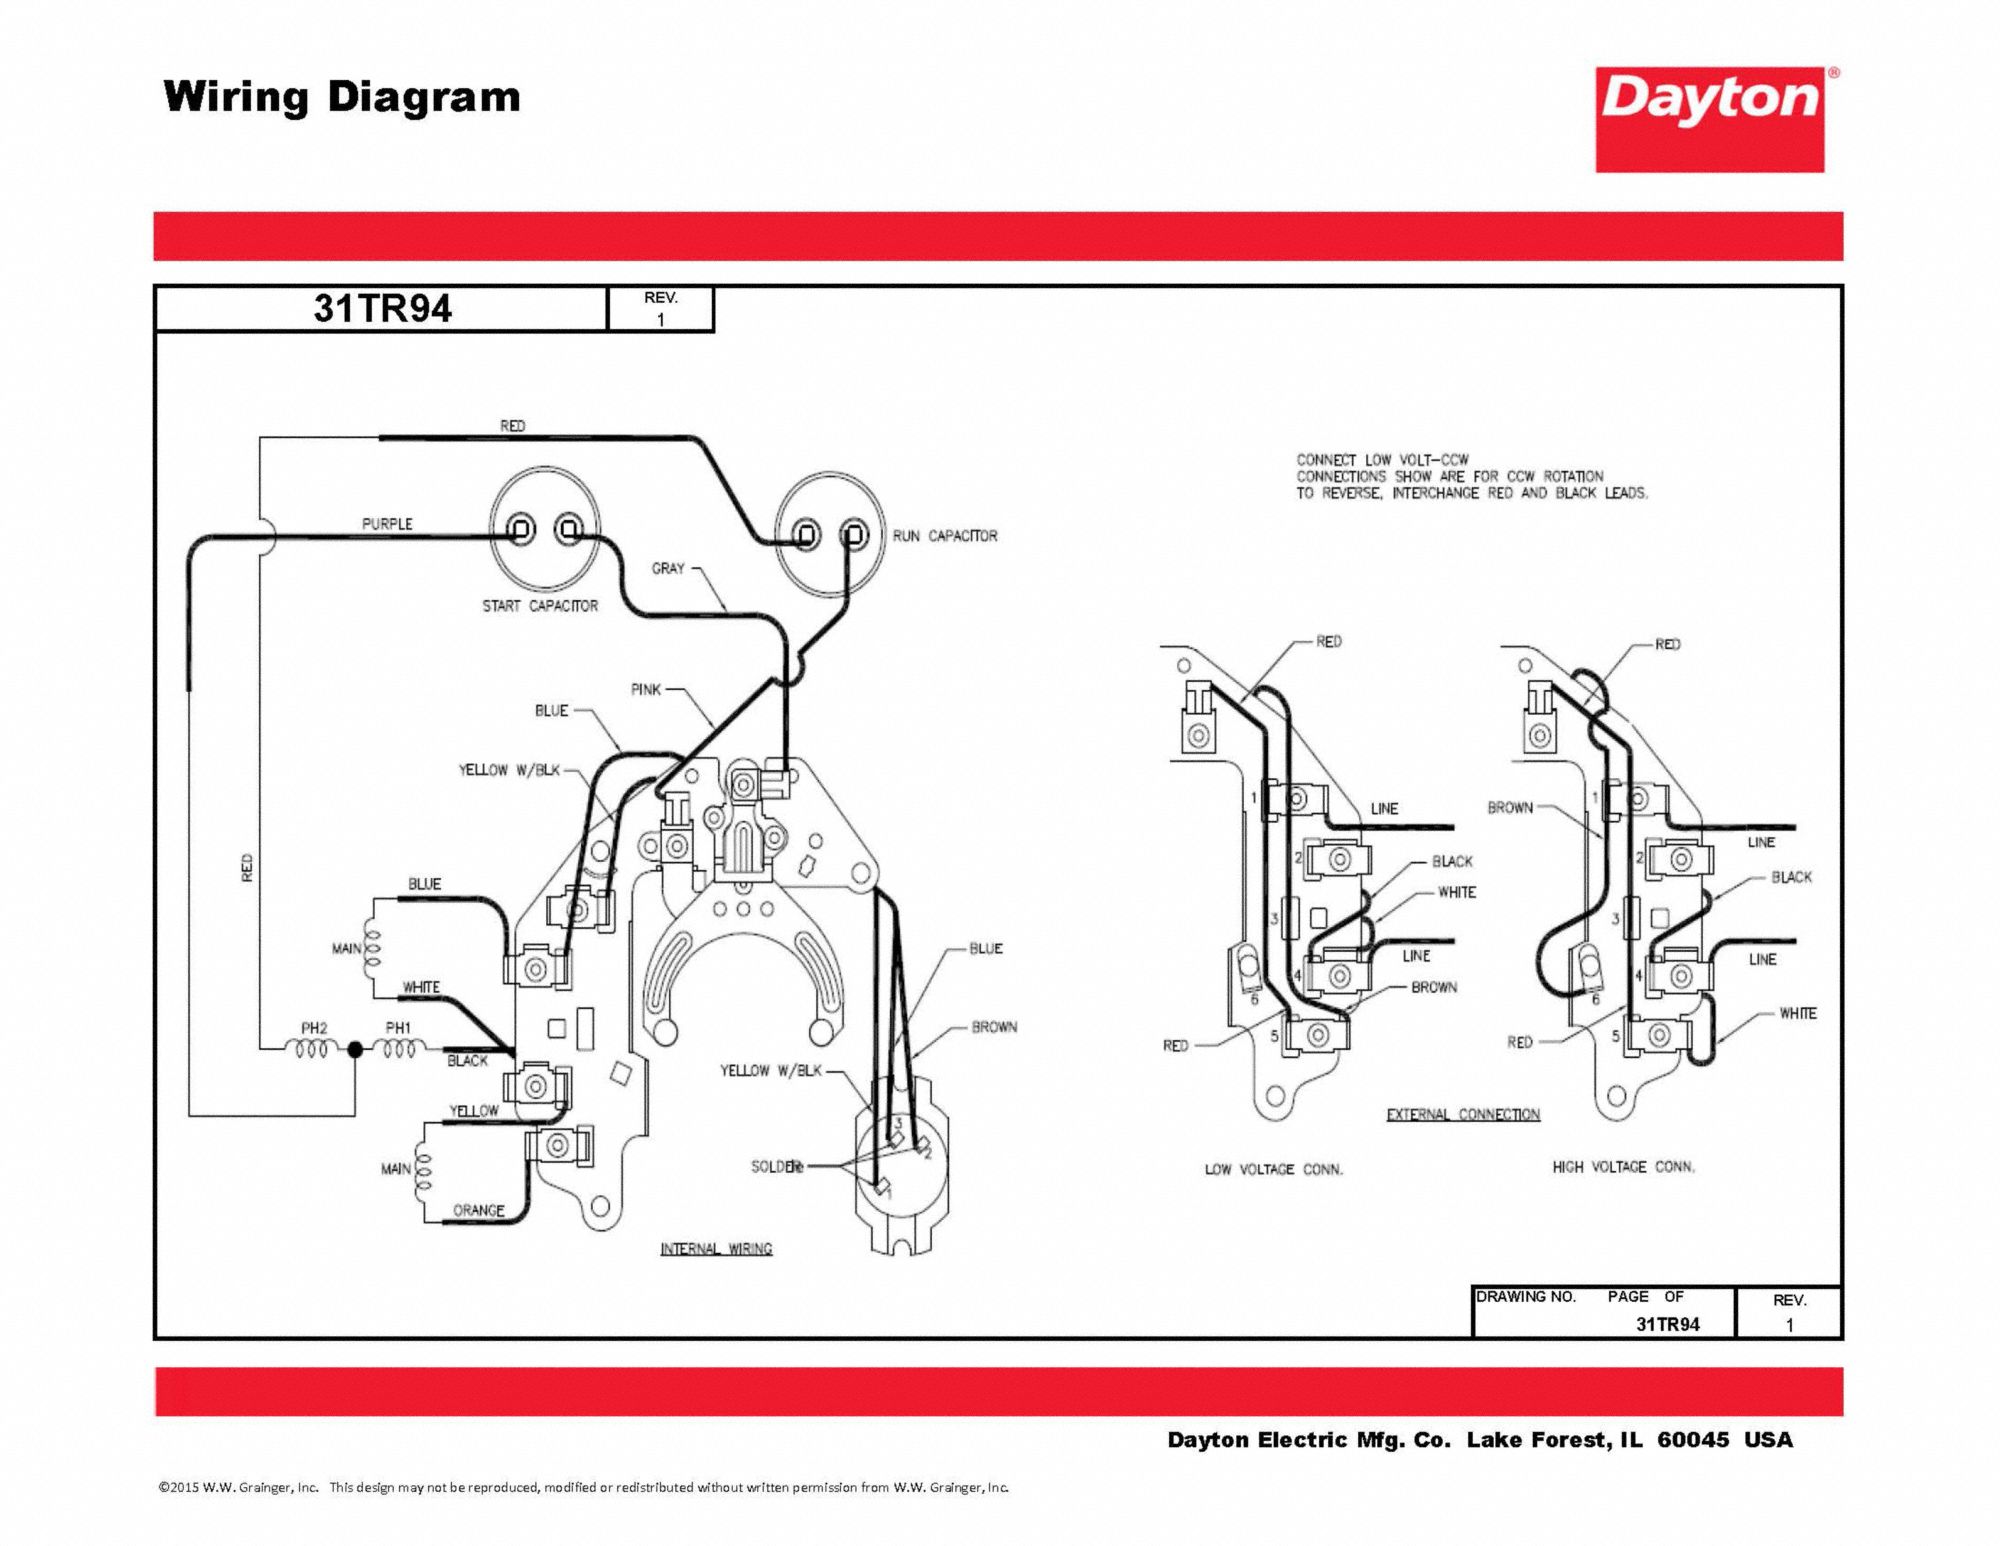 DAYTON General Purpose Motor: Open Dripproof, Rigid Base Mount, 1 HP, 3,450  Nameplate RPM, 56 Frame - 31TR94|31TR94 - Grainger  Dayton Industrial Motor Wiring Diagram    Grainger